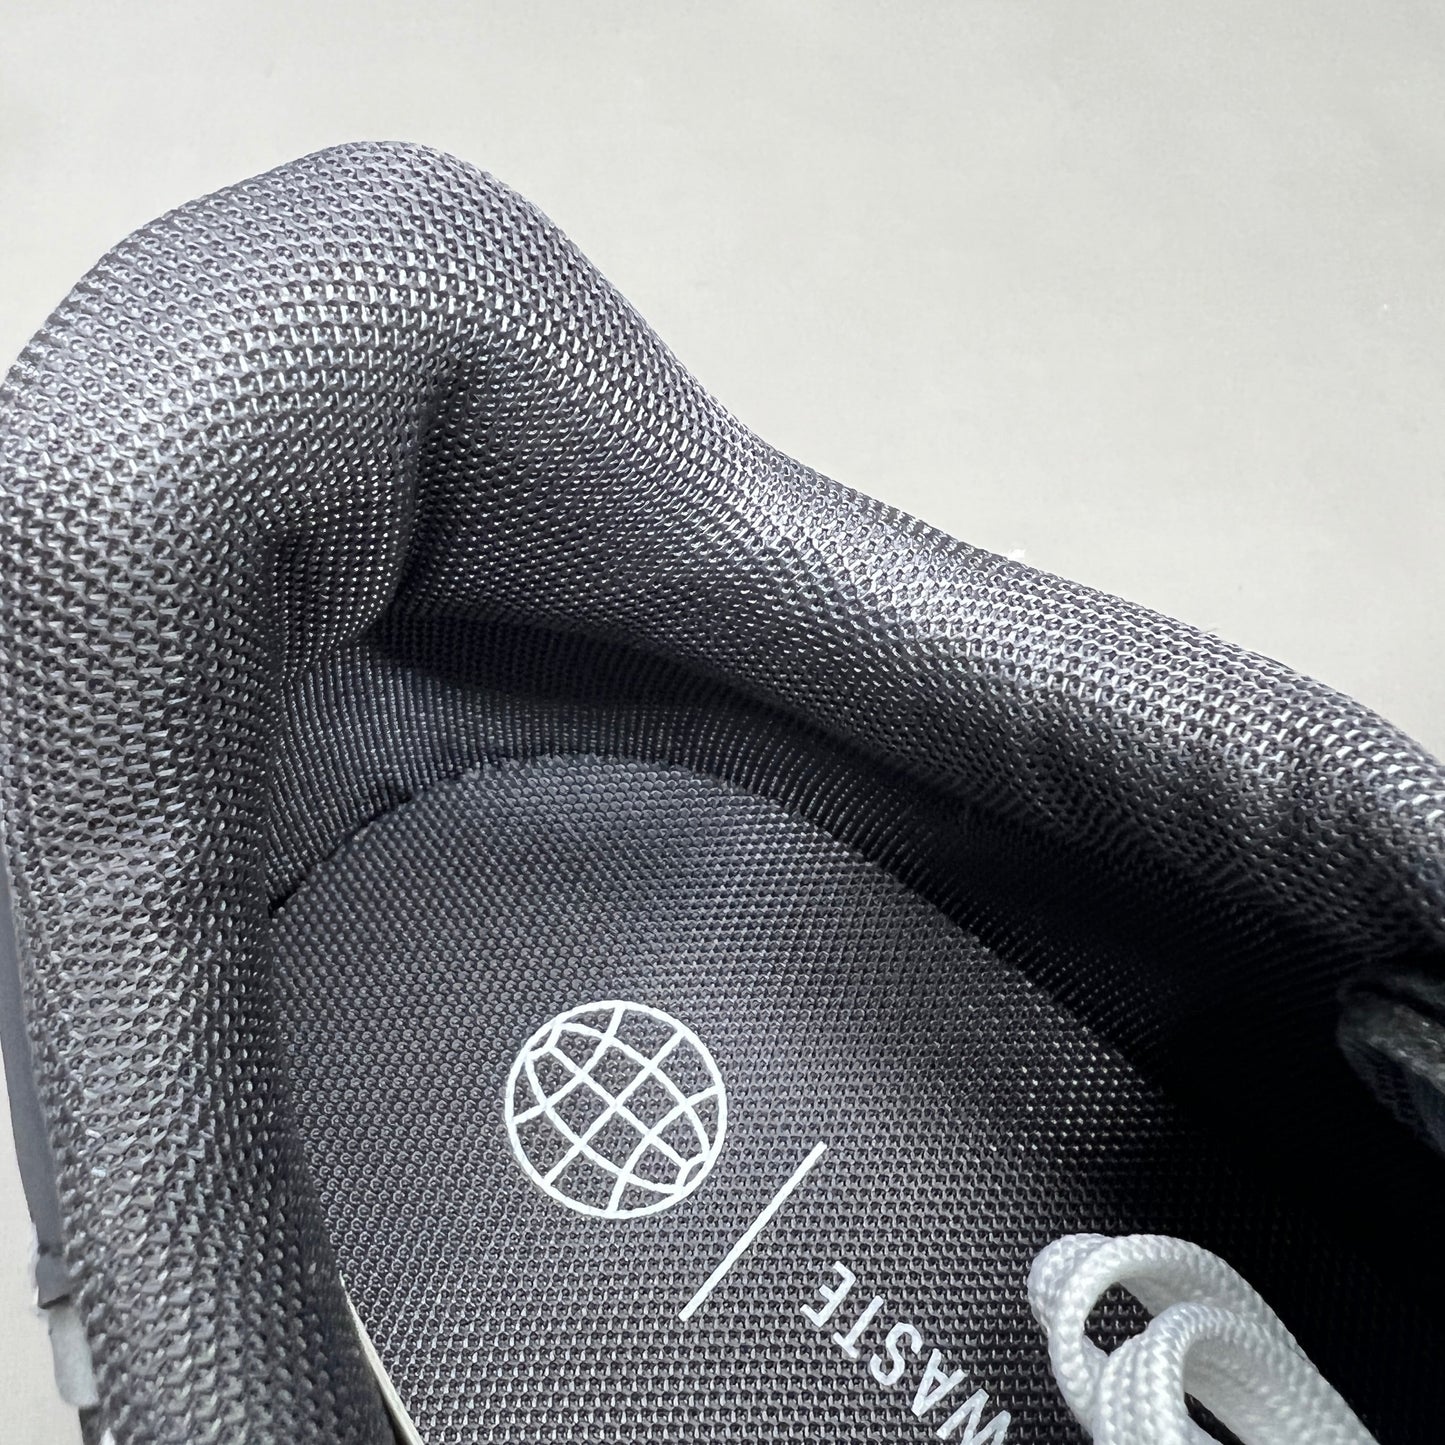 ADIDAS Golf Shoes S2G SL Waterproof Men's Sz 8.5 White / Grey GV9792 (New)